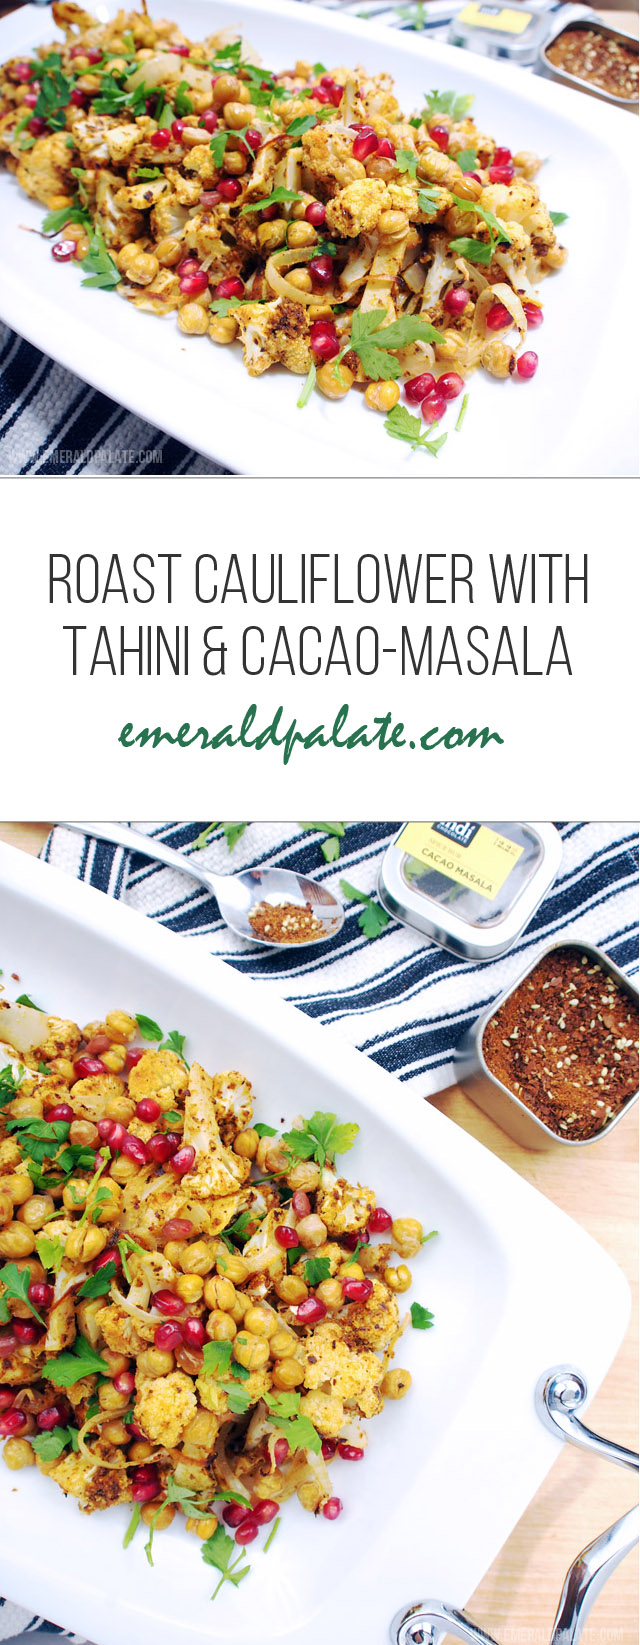 roast cauliflower and chickpea recipe